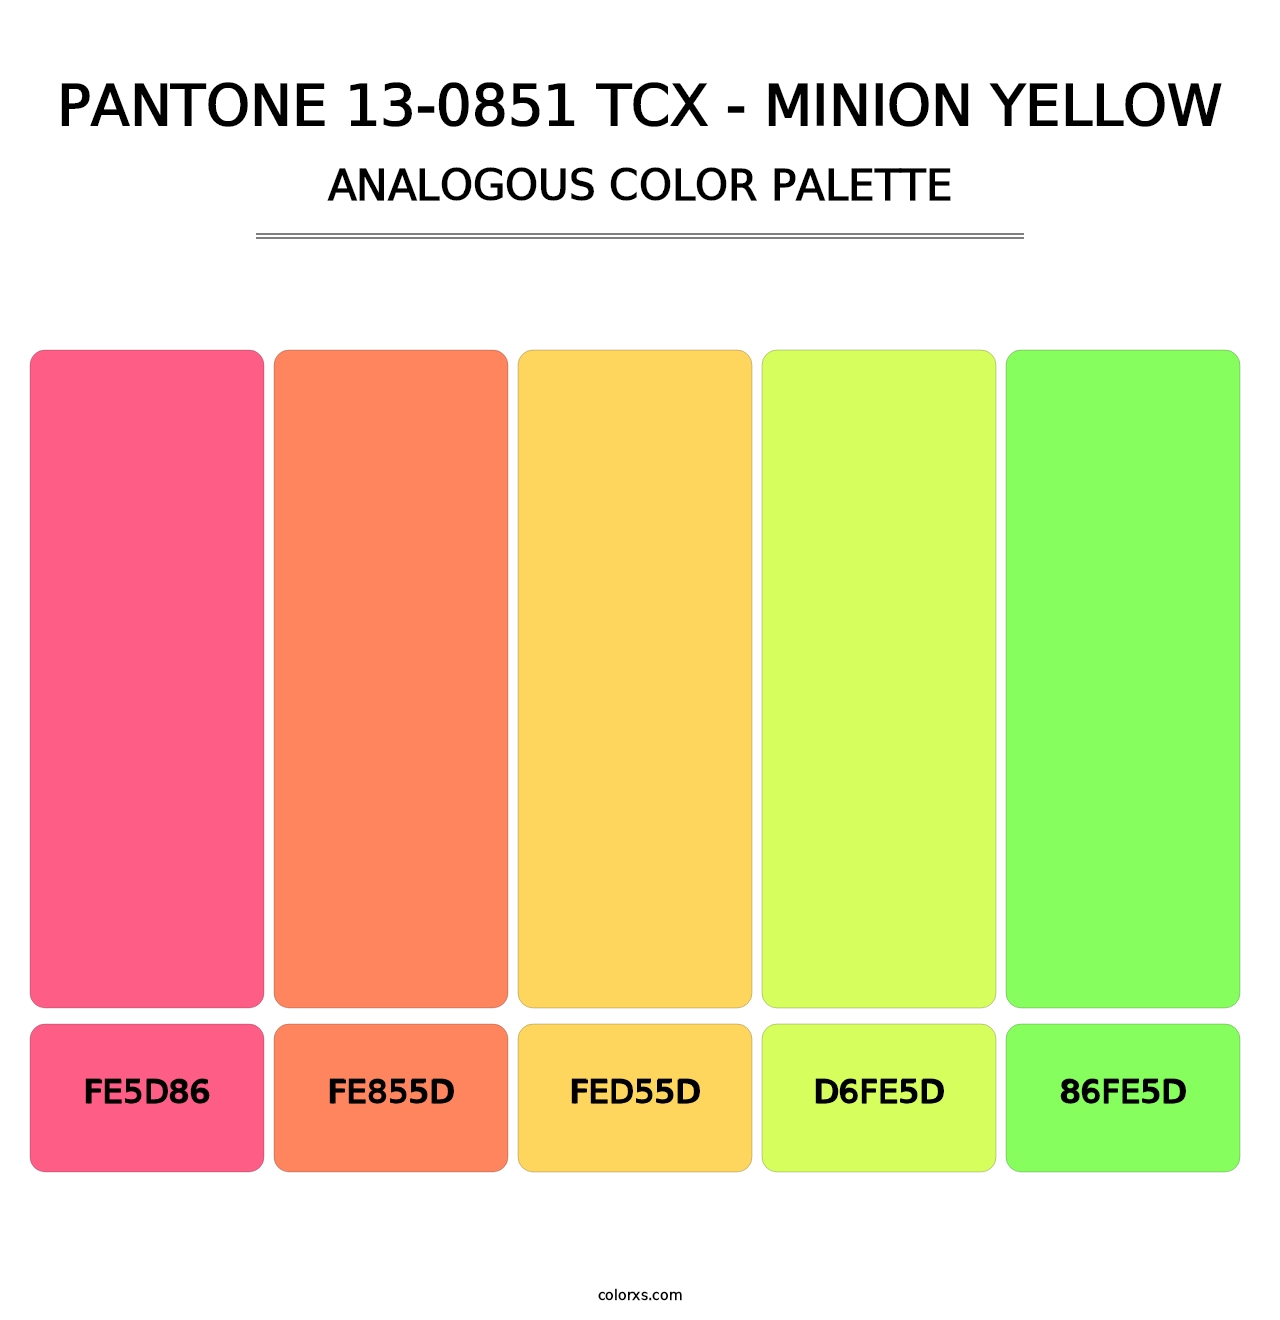 PANTONE 13-0851 TCX - Minion Yellow - Analogous Color Palette